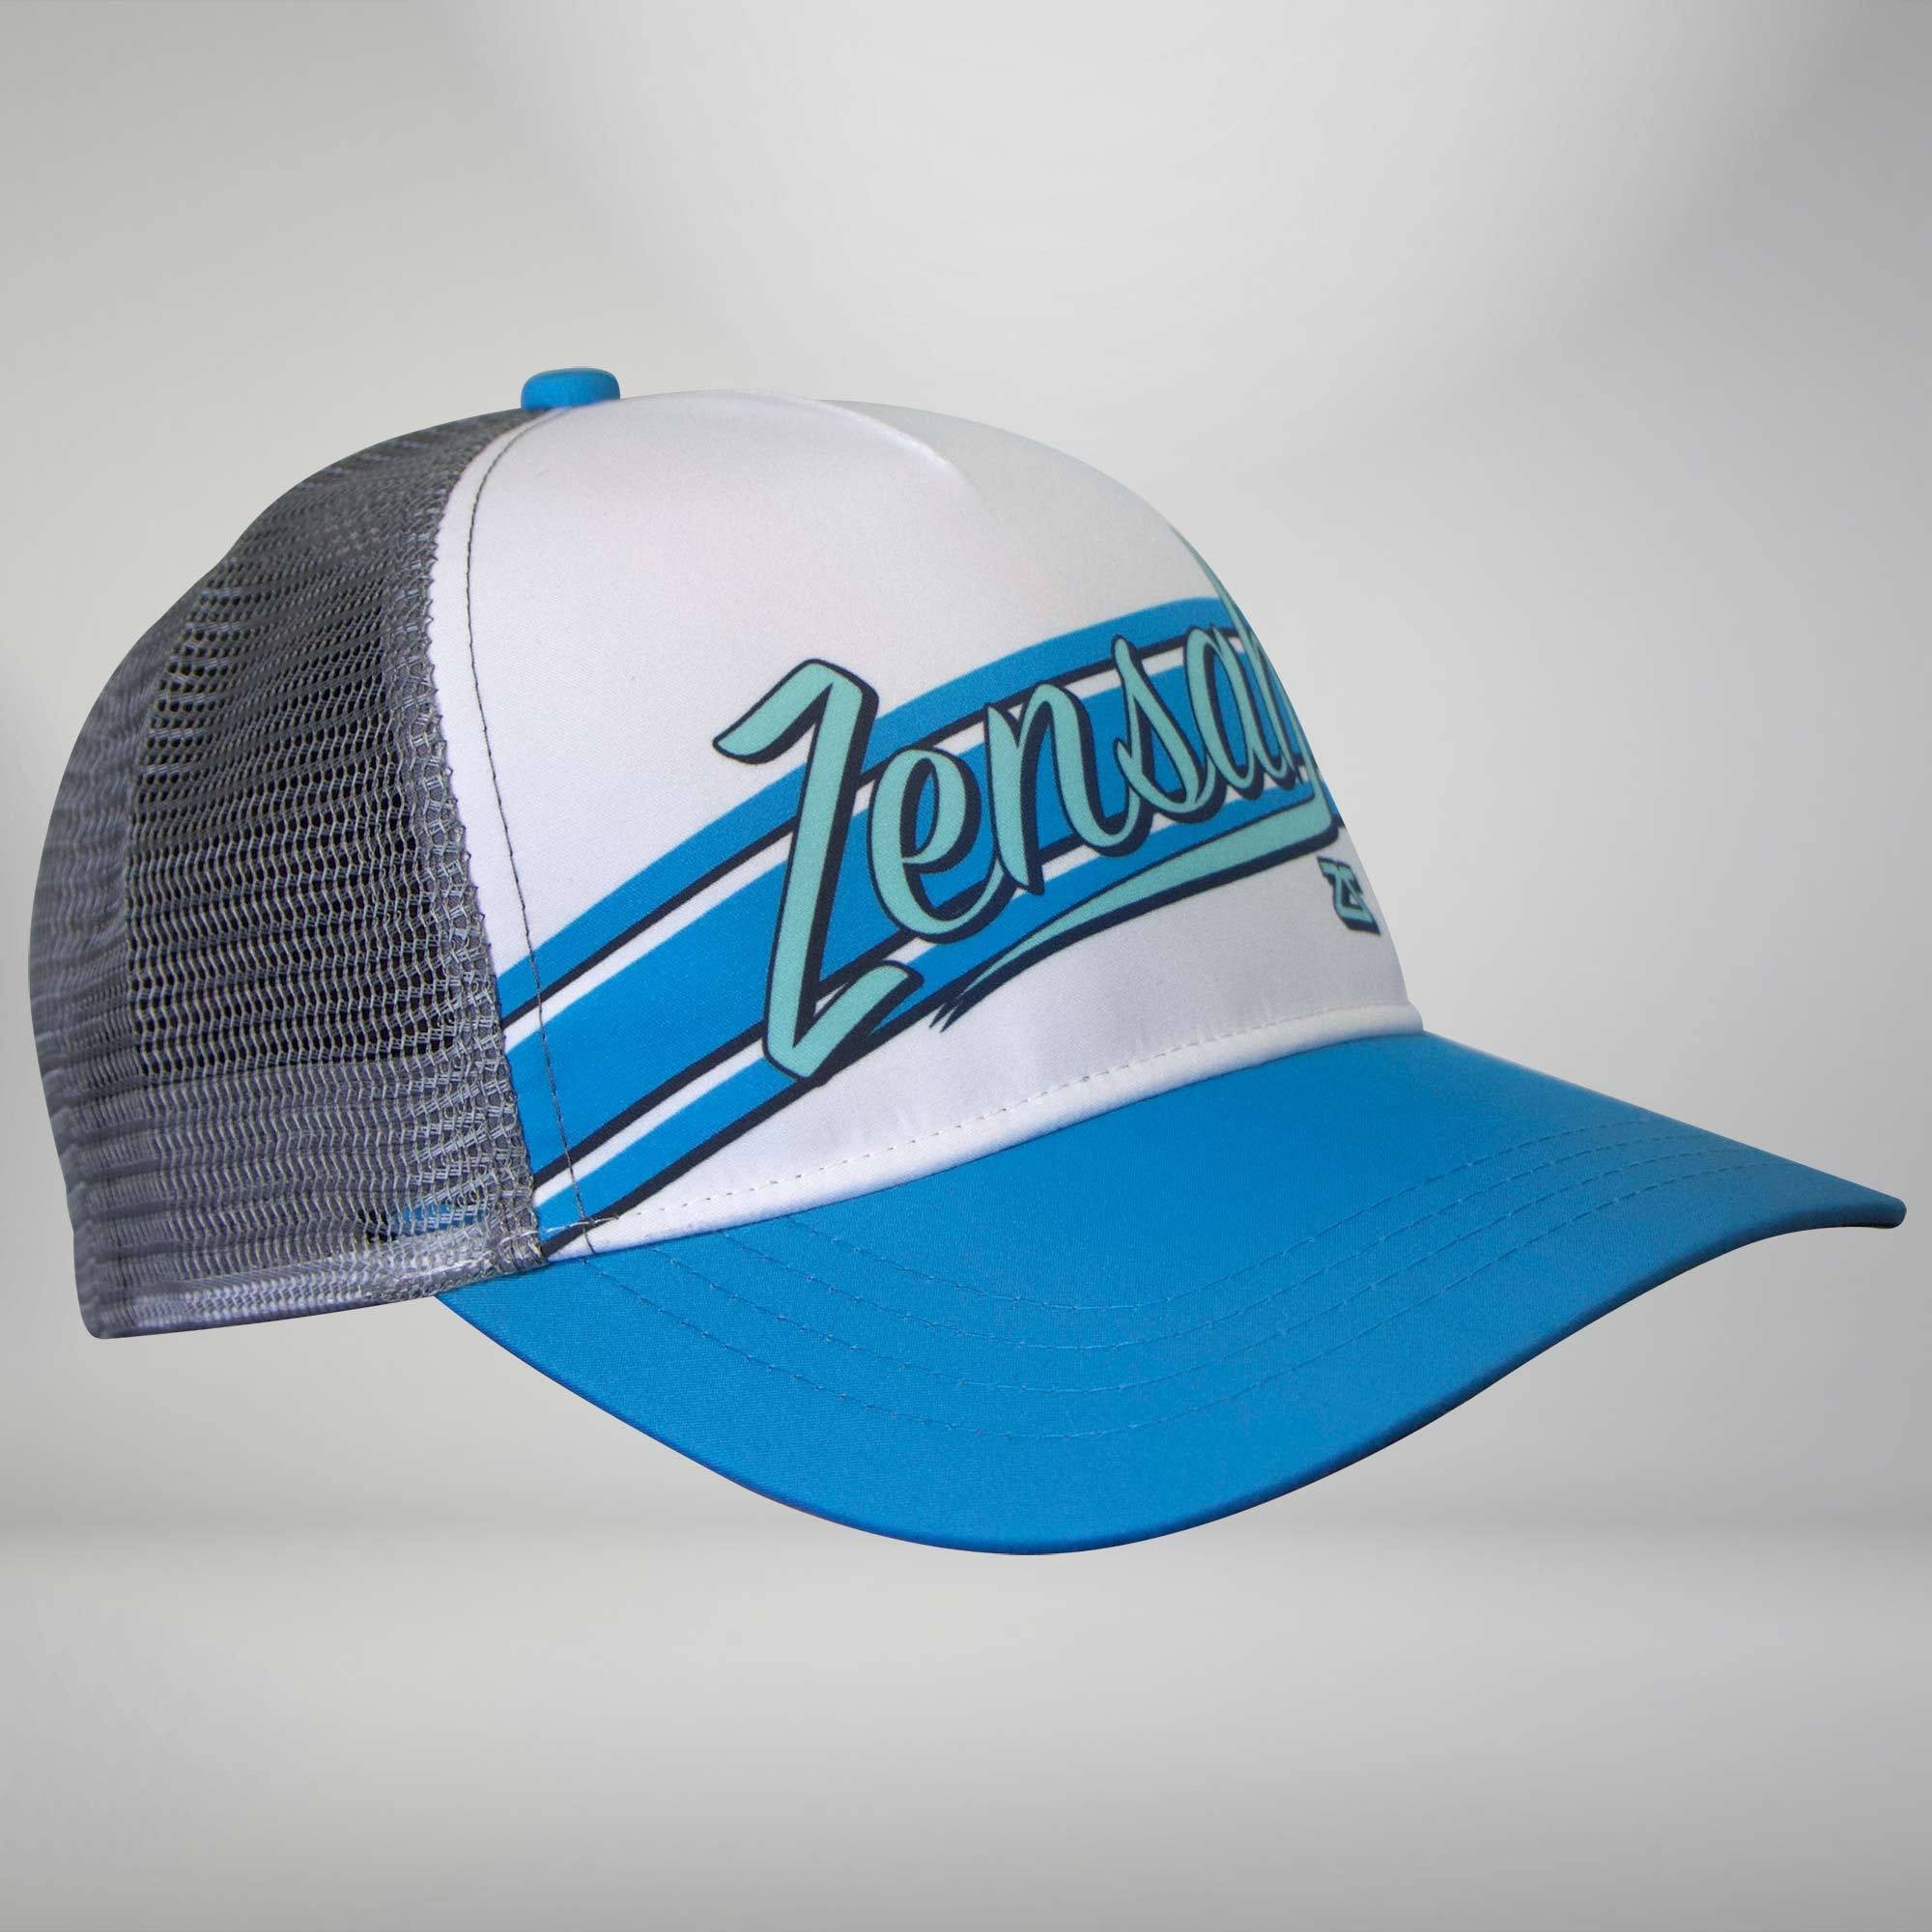 Adviseren Janice Huiskamer Trucker Hat - Best Hat For Runners - Lightweight Running Hat | Zensah